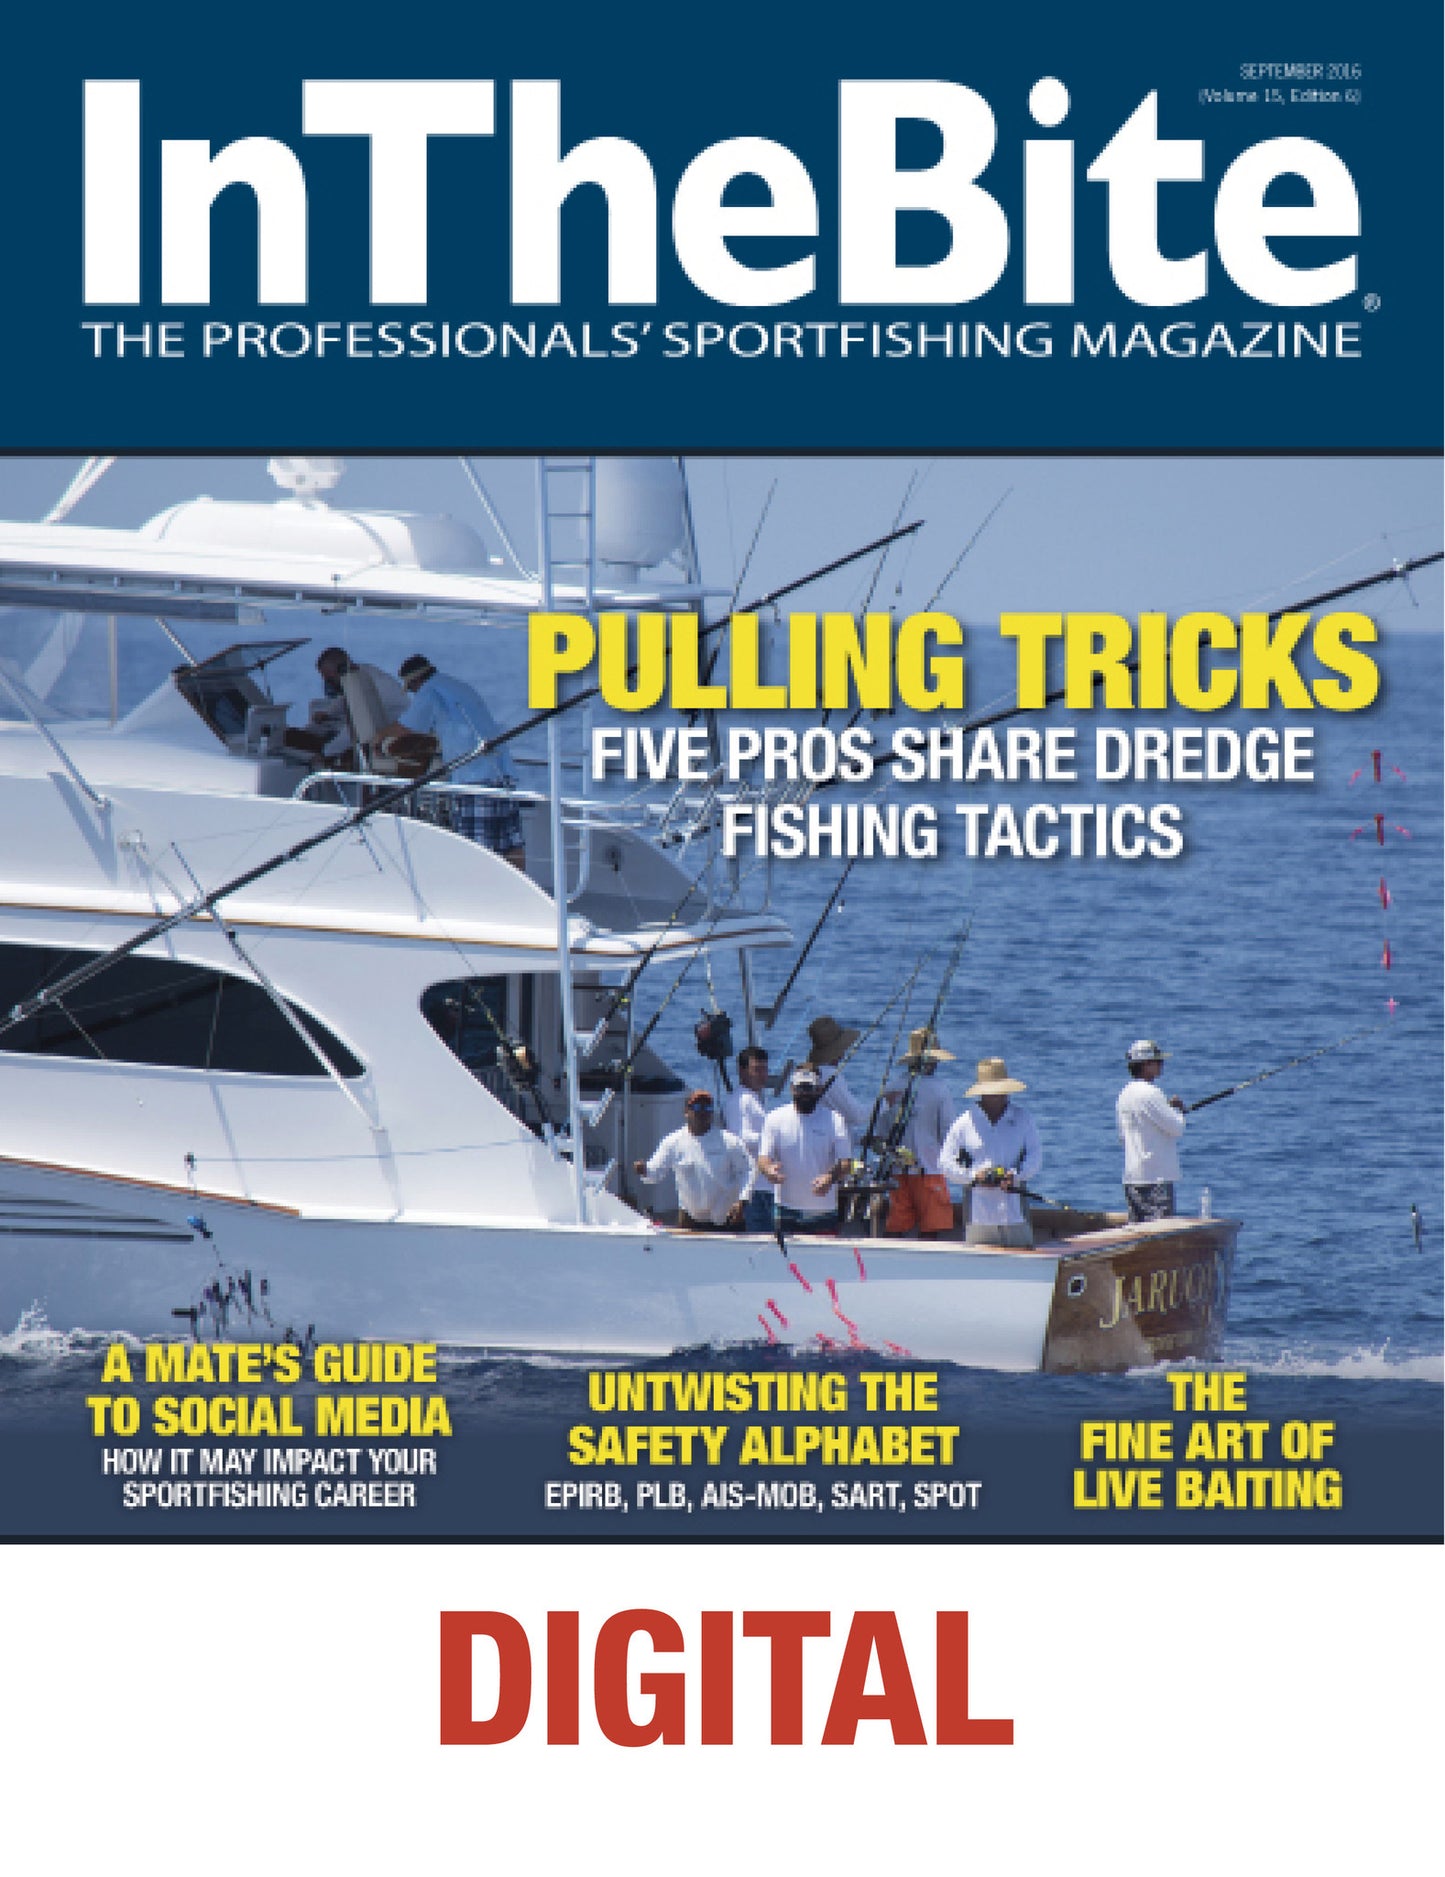 InTheBite Volume 15 Edition 06 September 2016 - Digital Edition